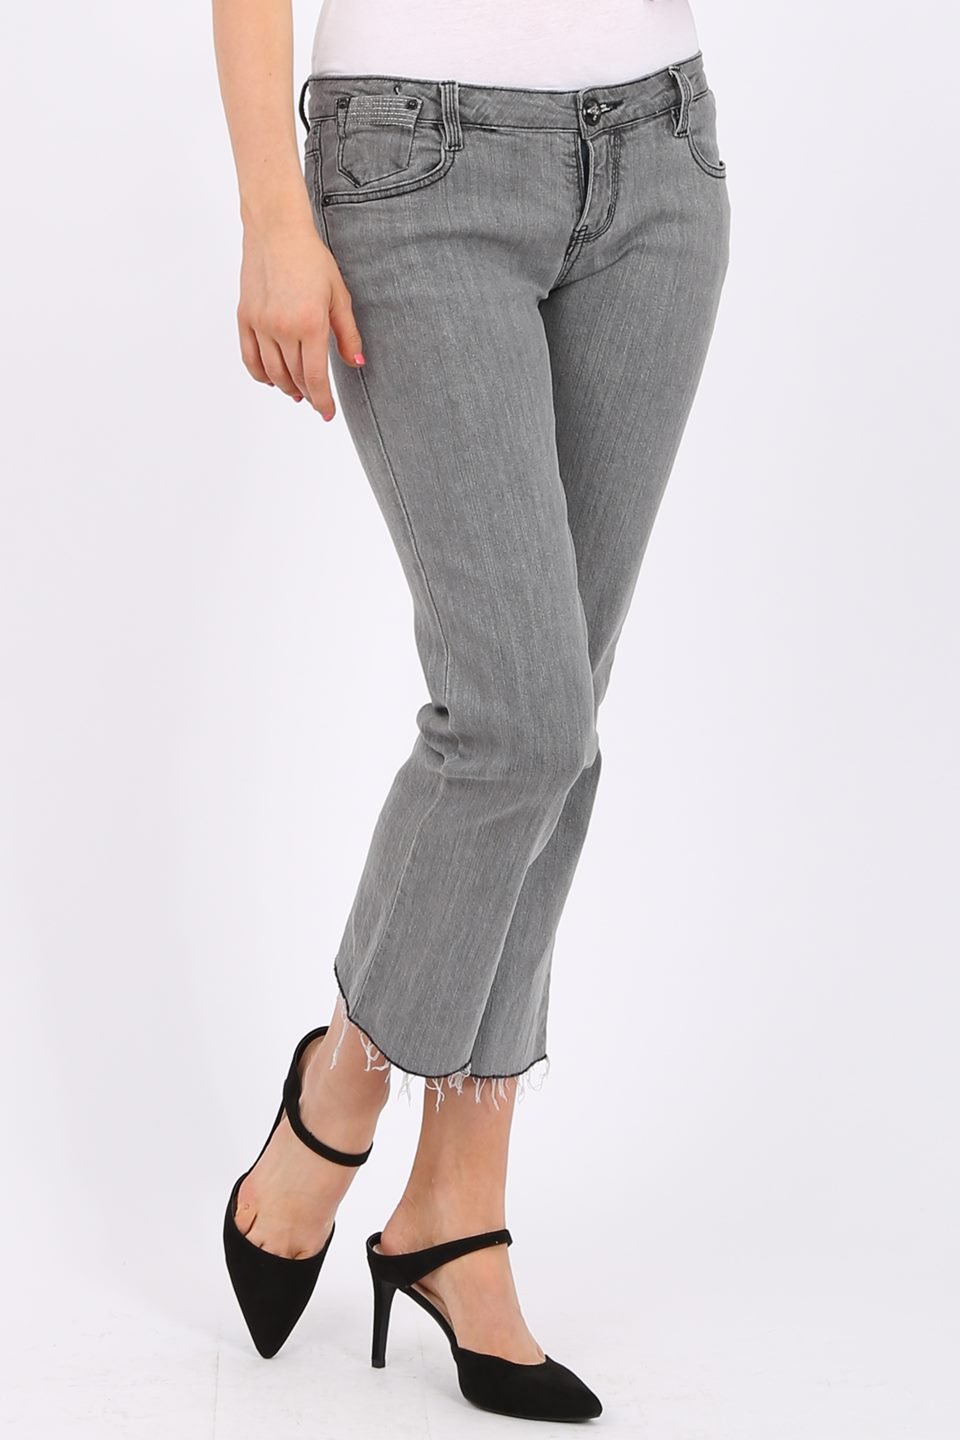 MISS PINKI Payton cropped jeans in grey